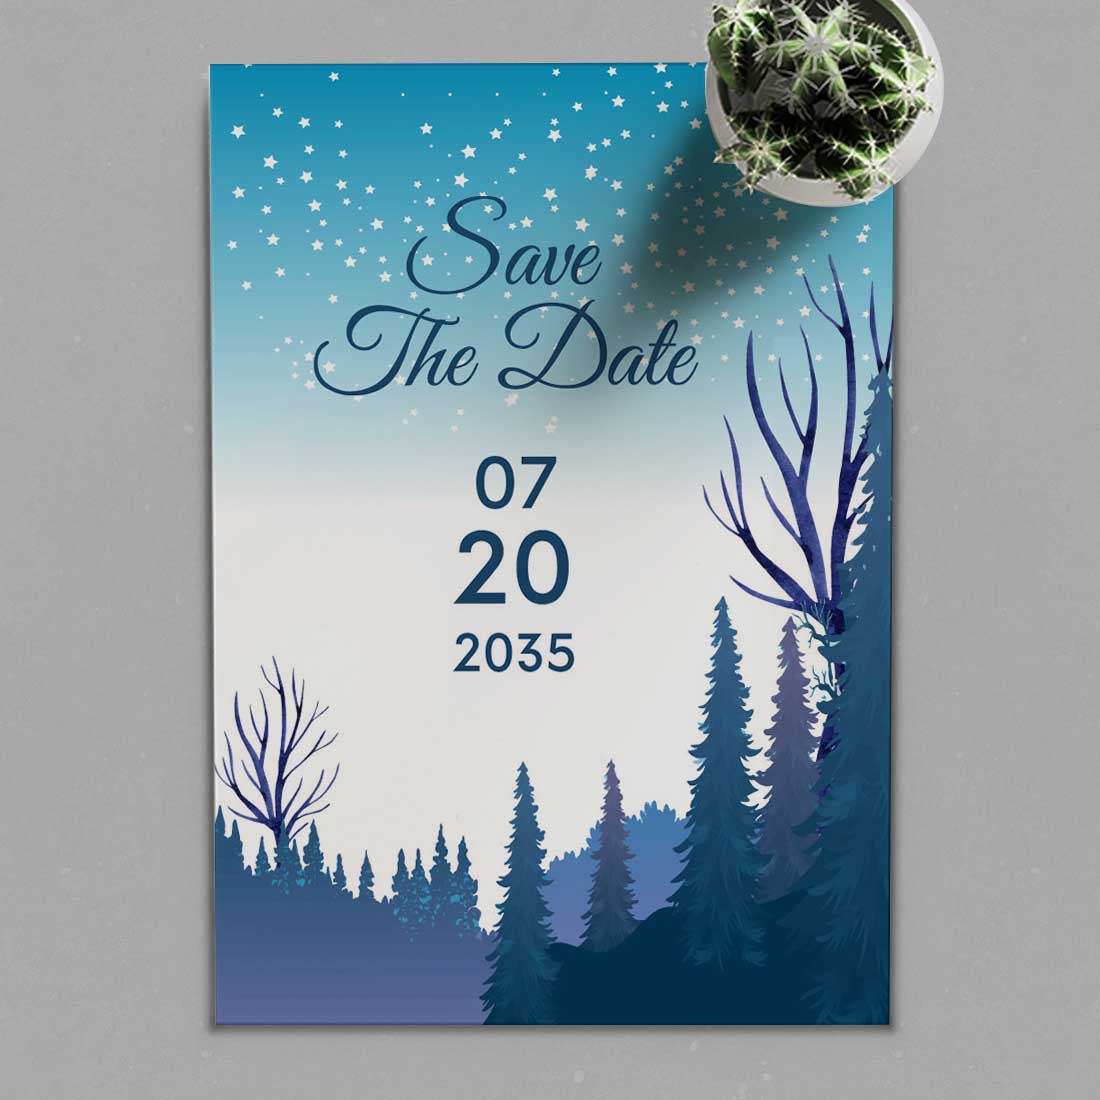 Winter Wedding Card with Frozen Landscape presentation.